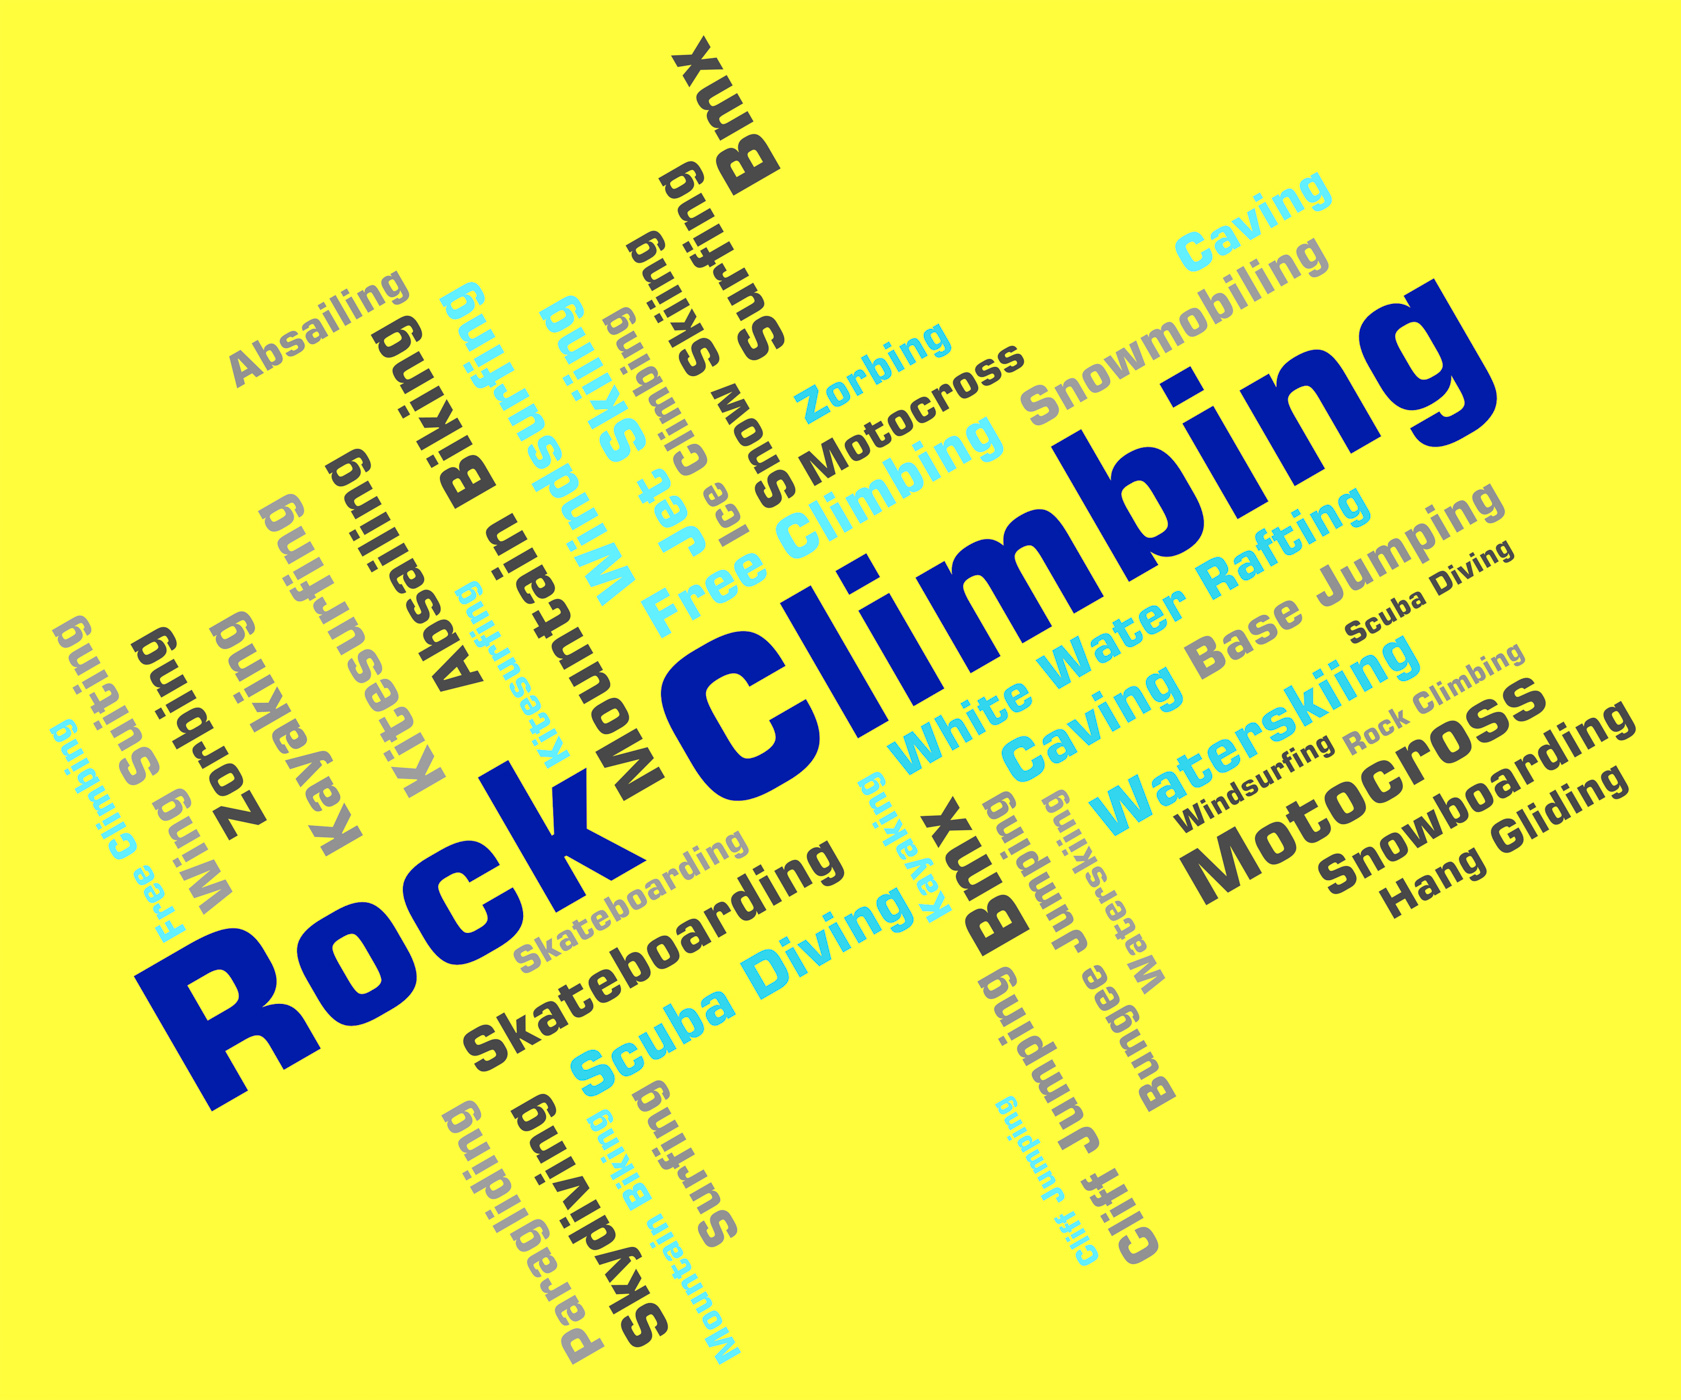 Rock climbing represents extreme climber and rock-climbing photo